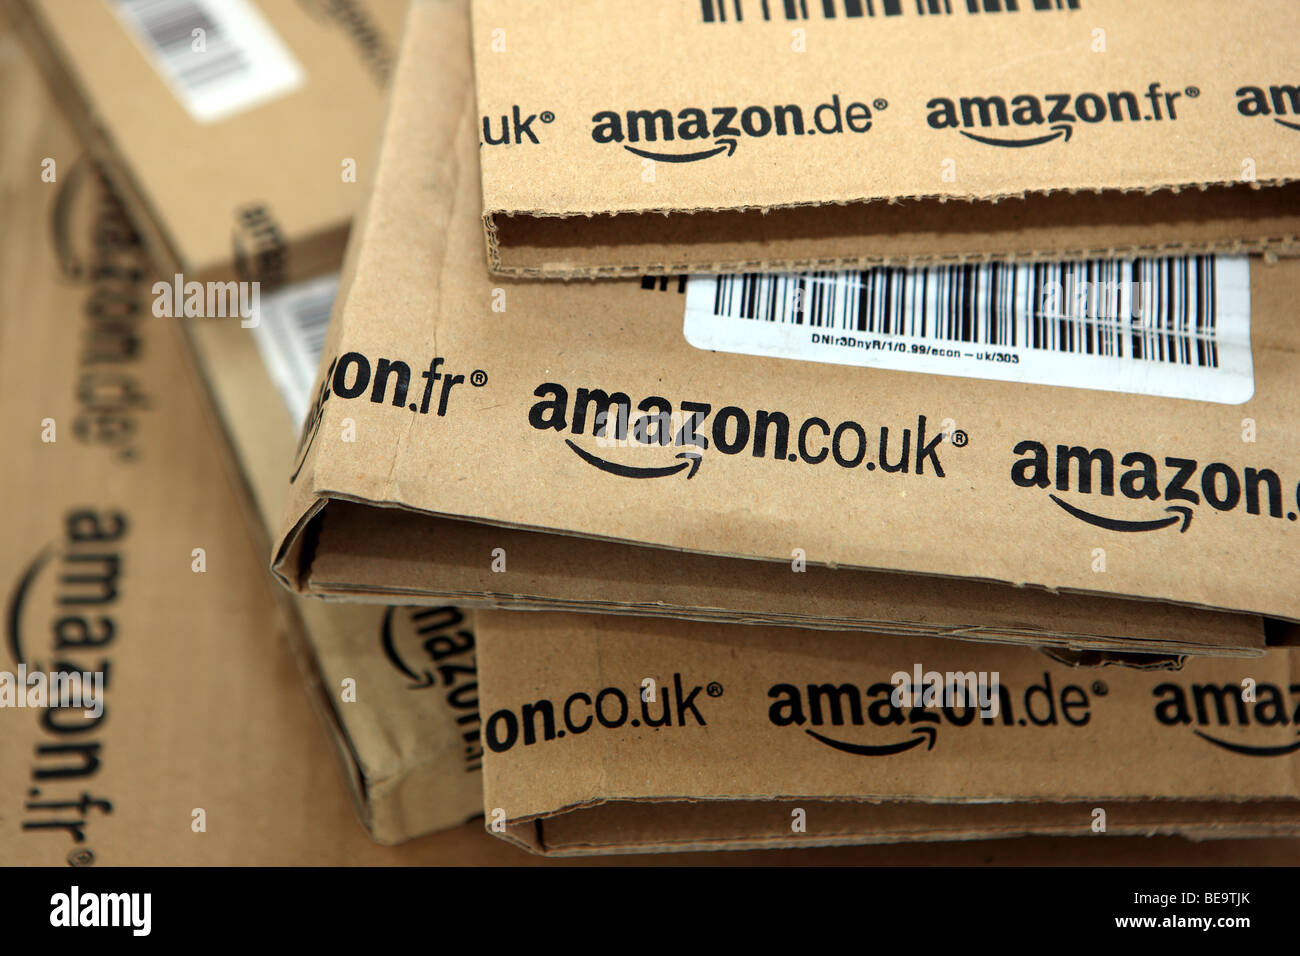 Amazon packaging Stock Photo